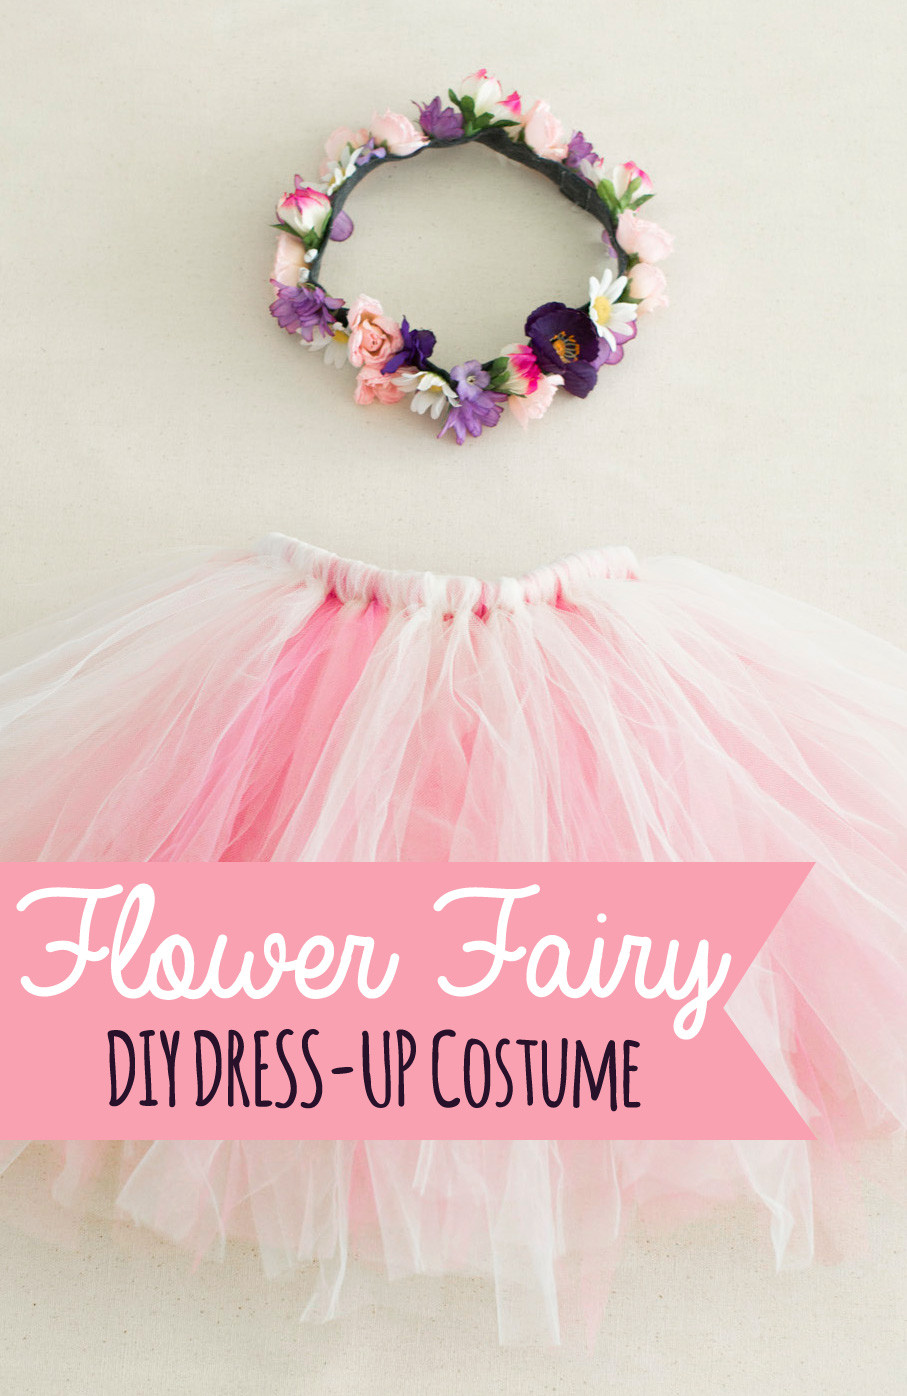 DIY Fairy Costume
 The Nonpareil Home DIY Costume Flower Fairy